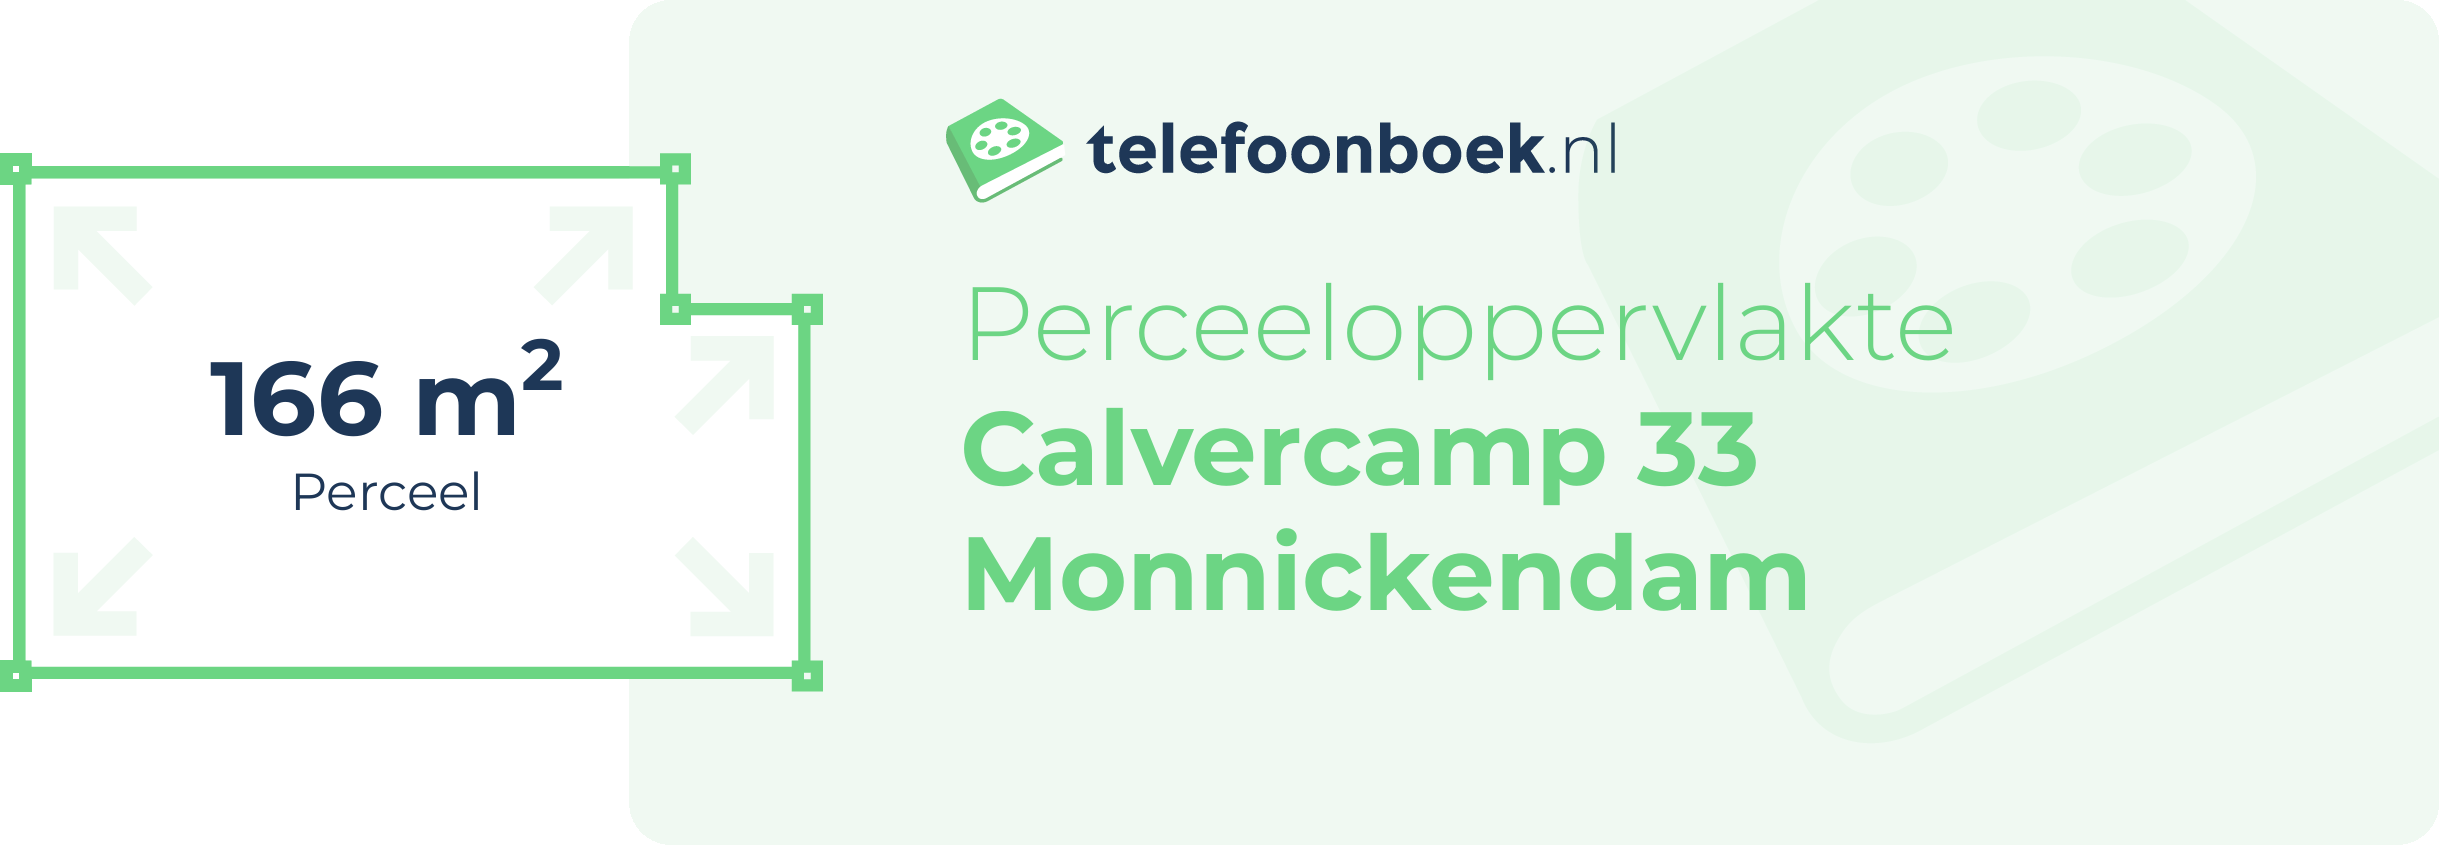 Perceeloppervlakte Calvercamp 33 Monnickendam